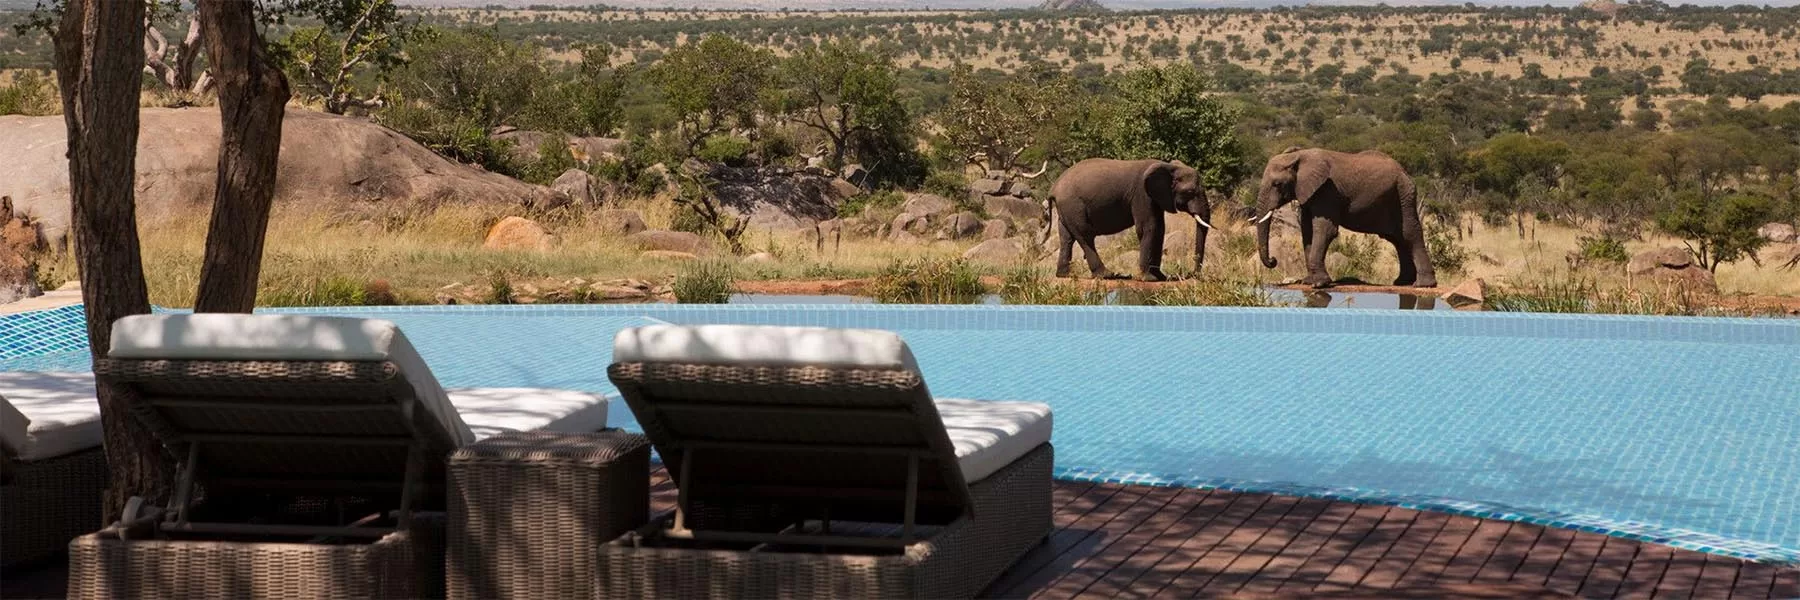 Top hotels of Serengeti national park